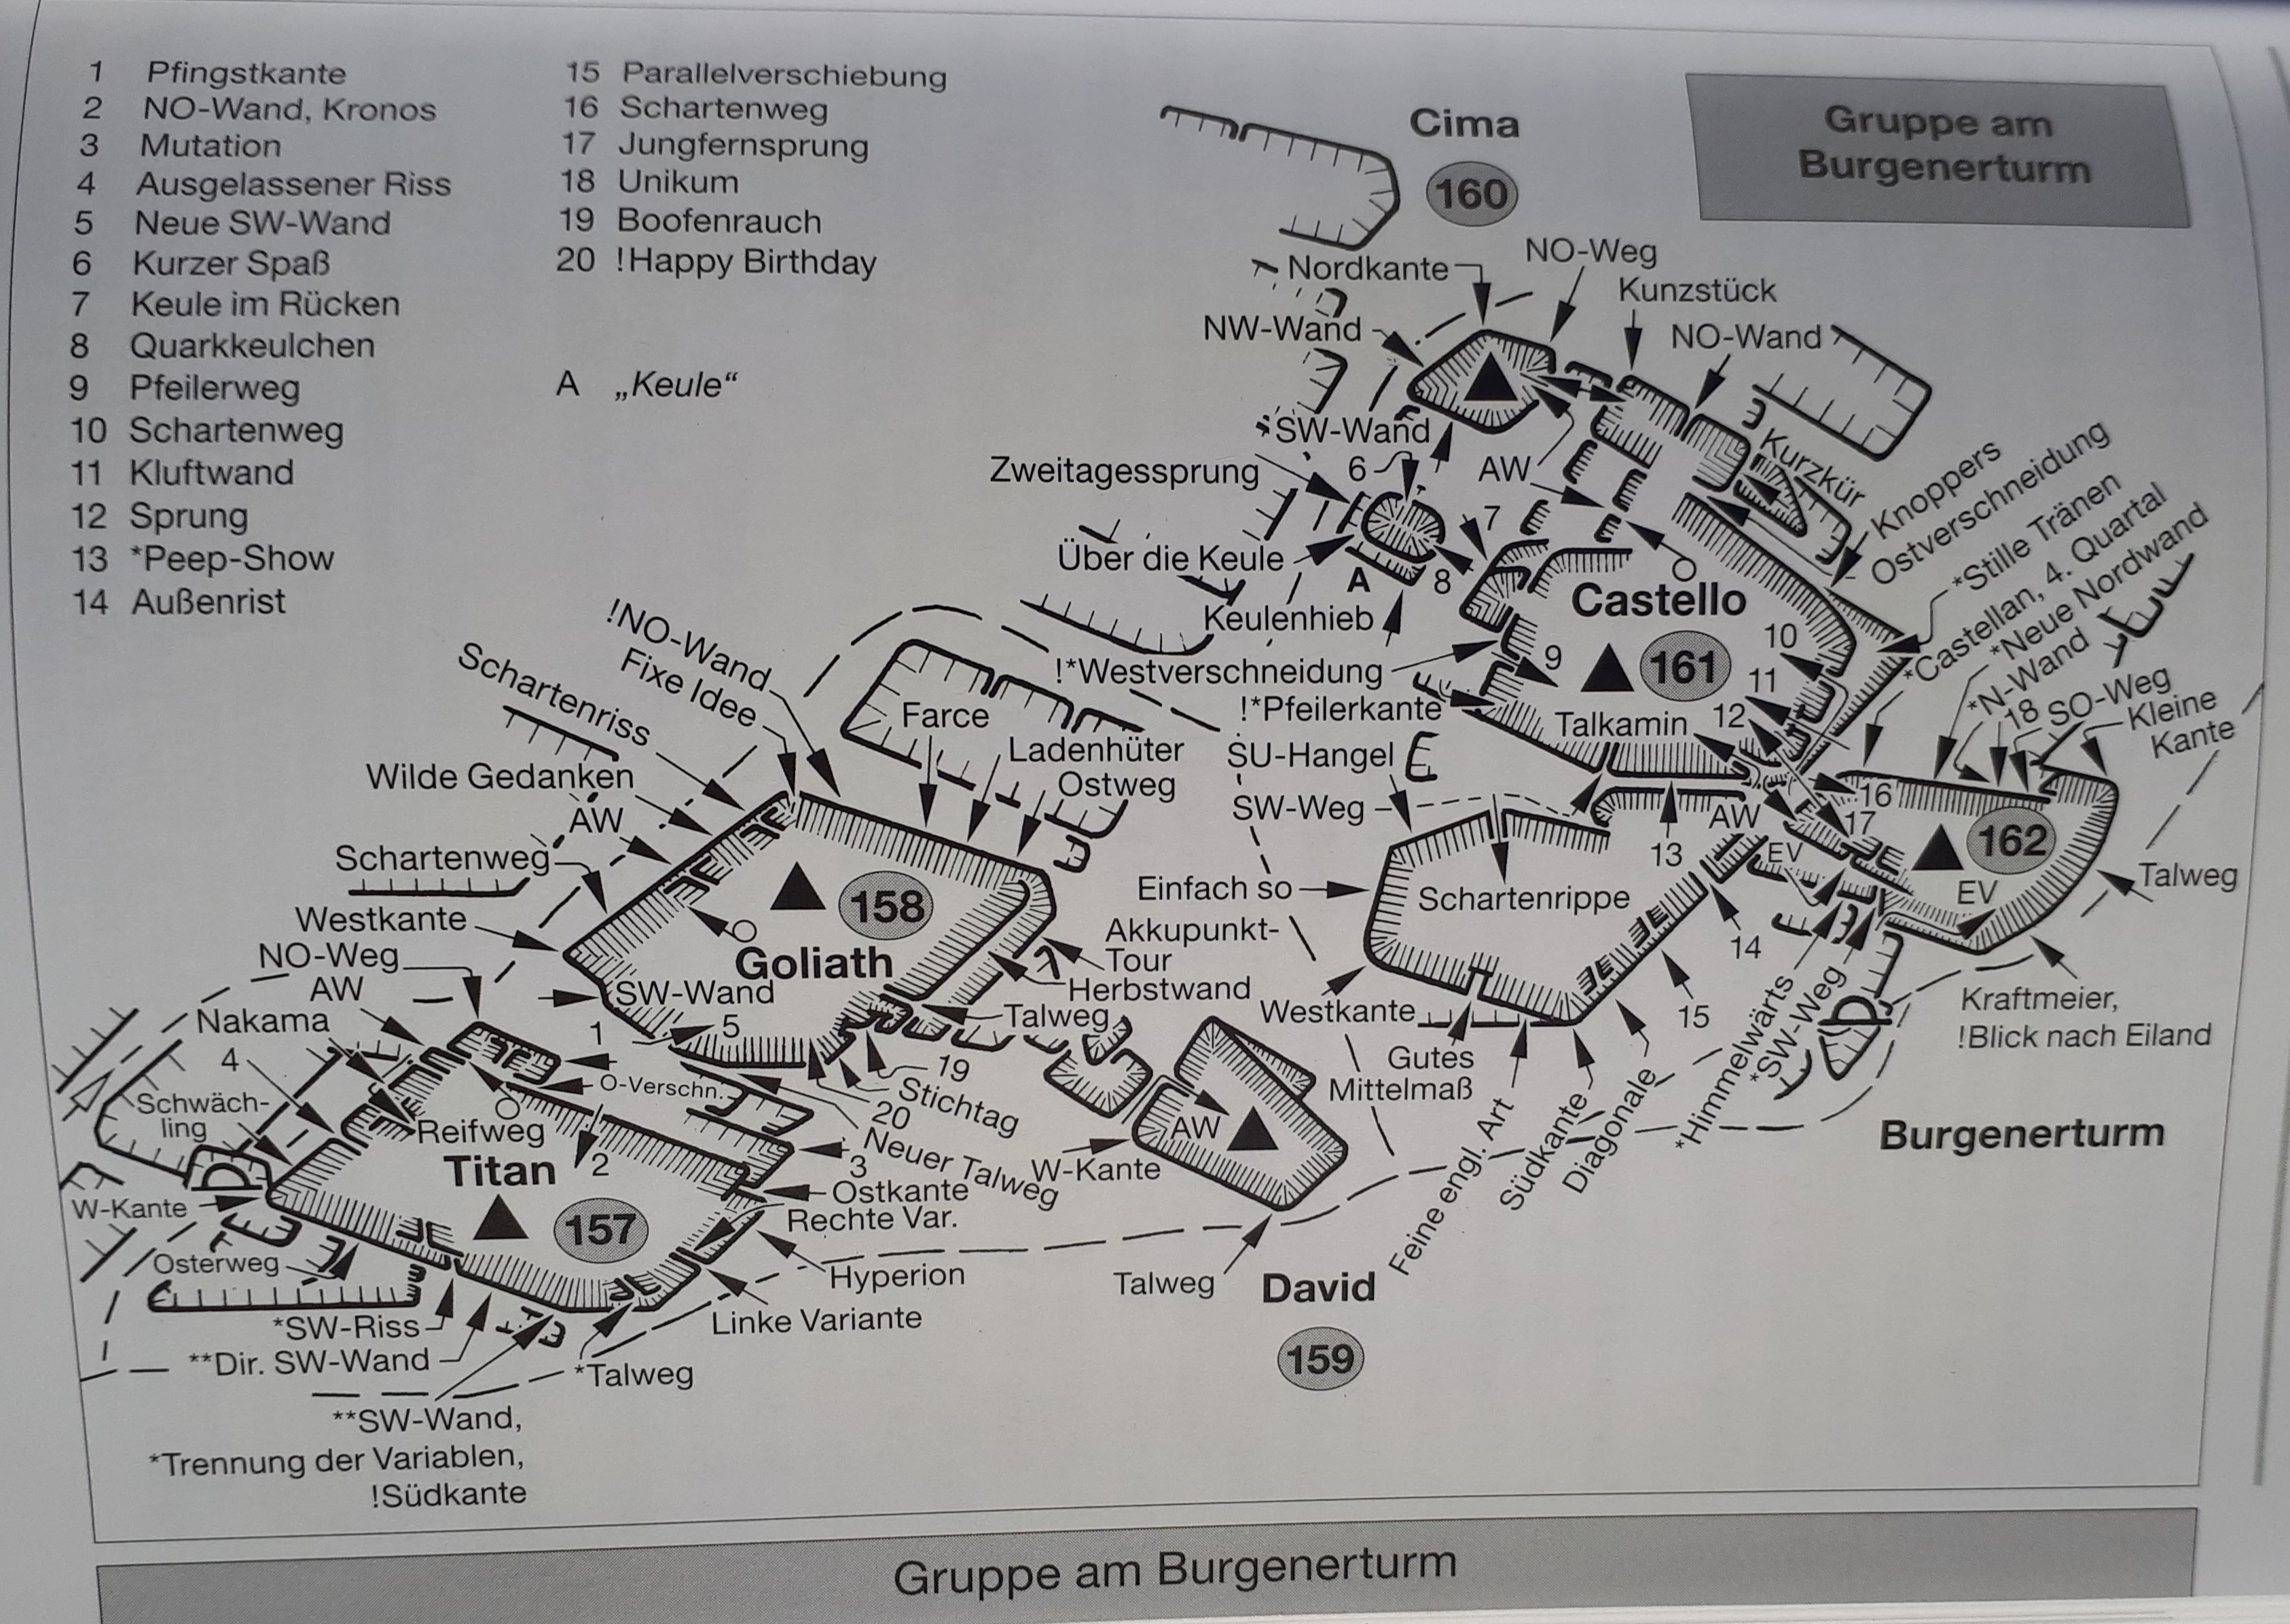 oblast: Saské Švýcarsko (Německo), sektor: Bielatal, skála: BURGENERTURM